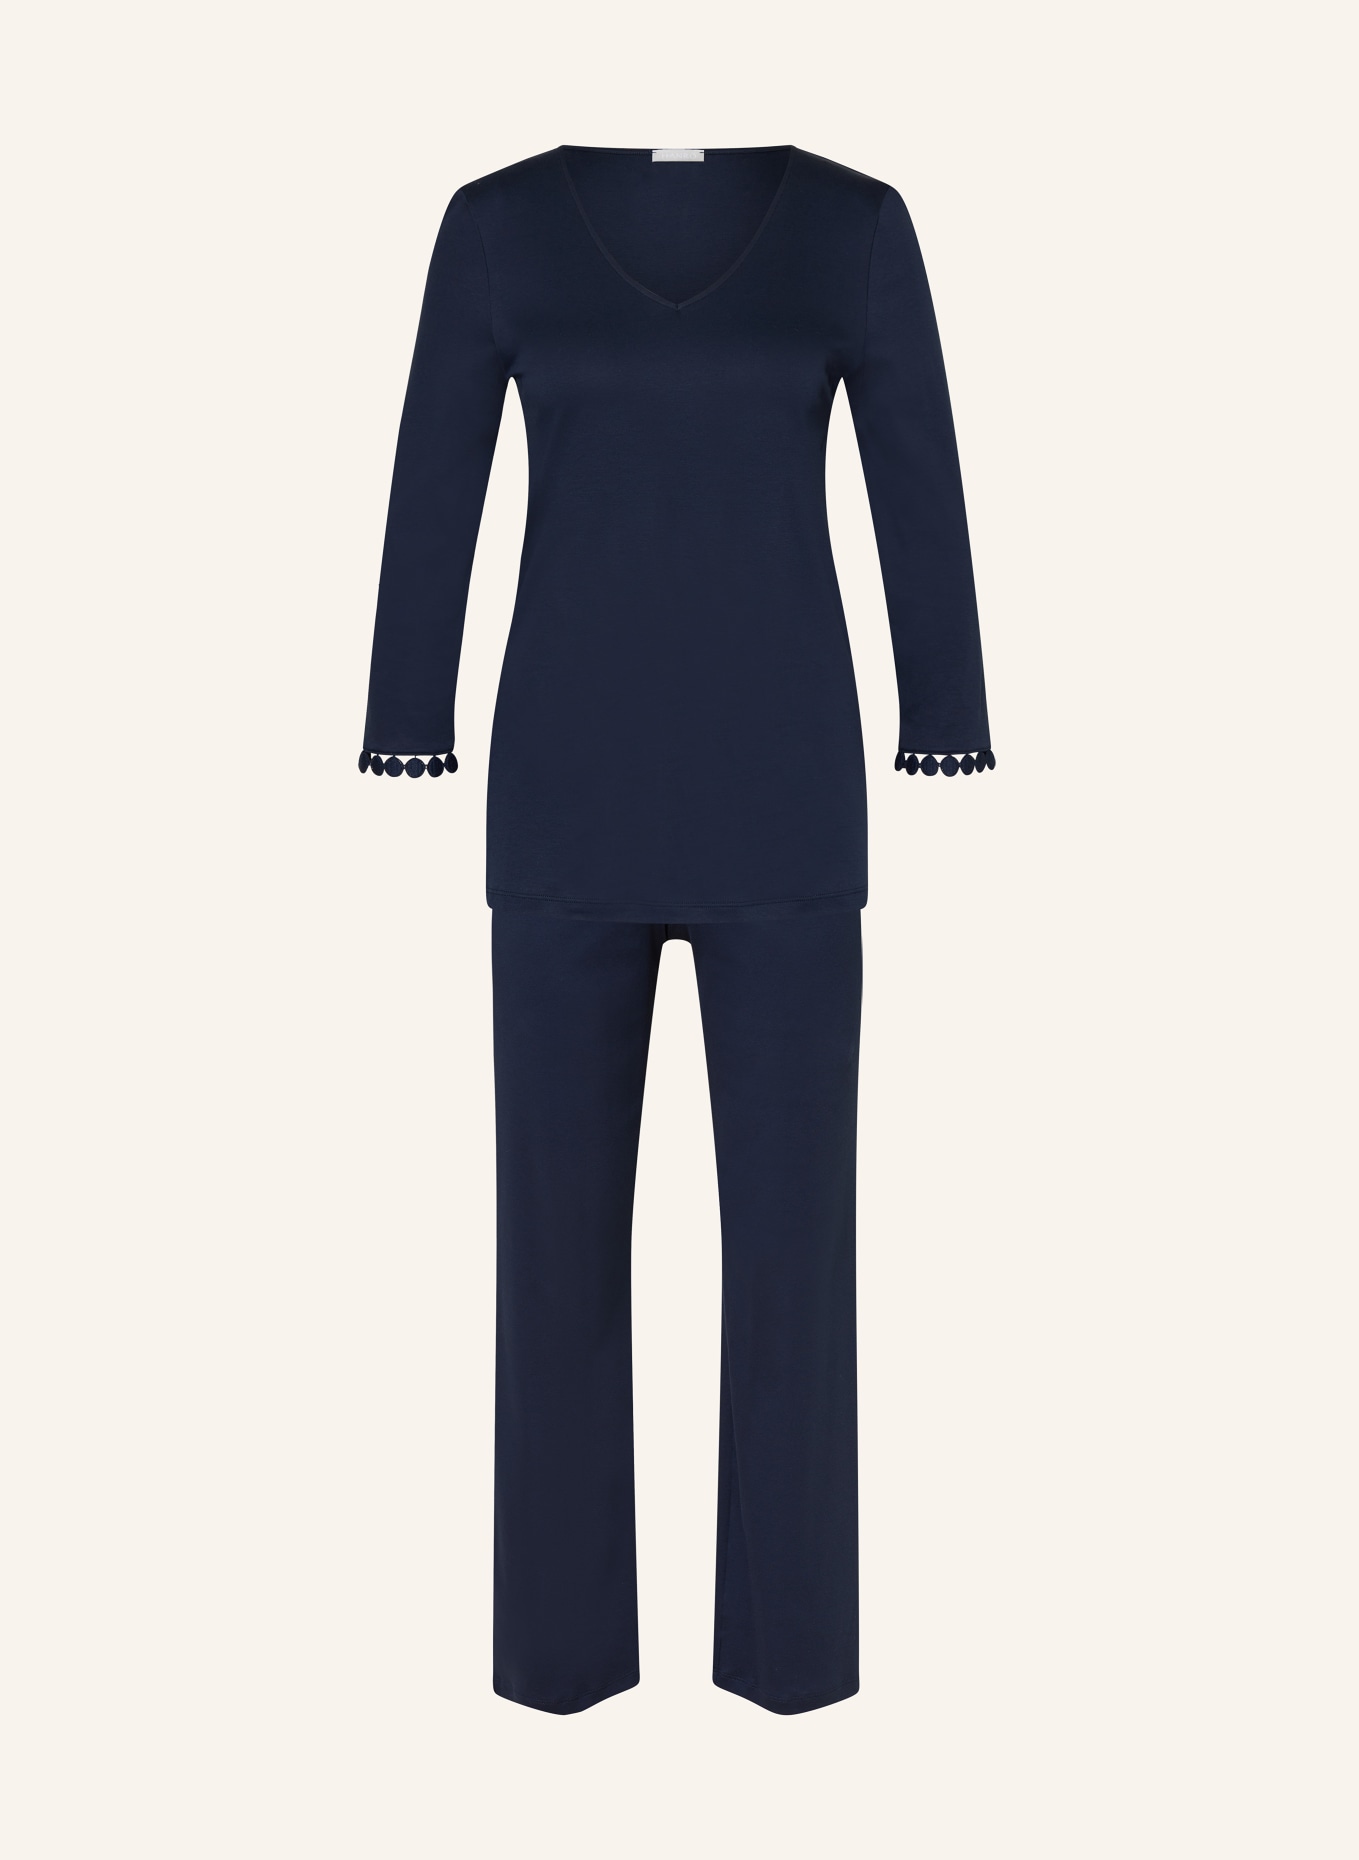 HANRO Schlafanzug ROSA mit 3/4-Arm, Farbe: DUNKELBLAU (Bild 1)